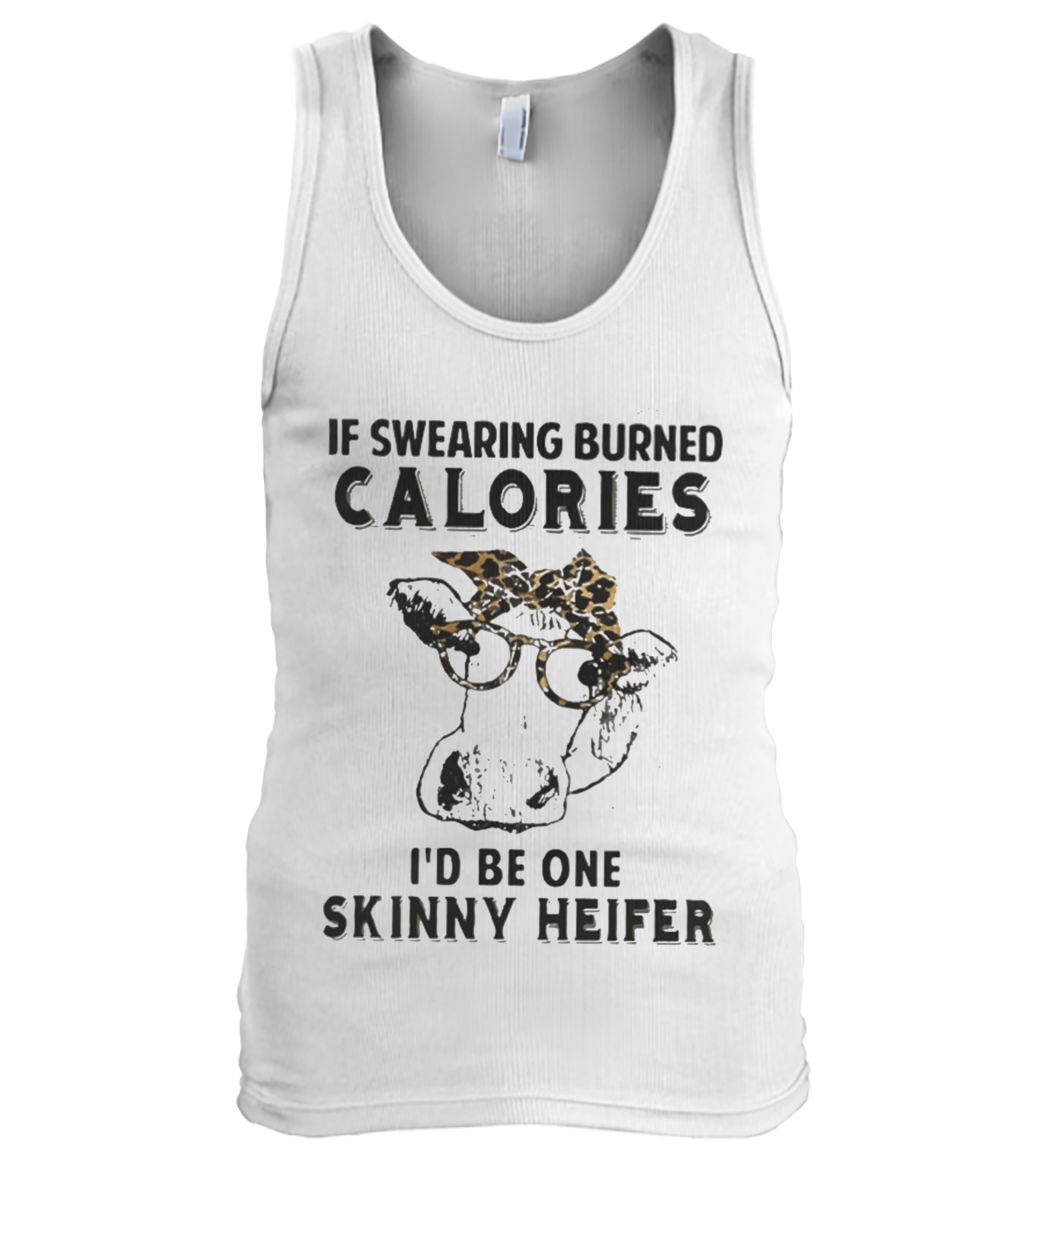 If swearing burned calories I'd be one skinny heifer men's tank top